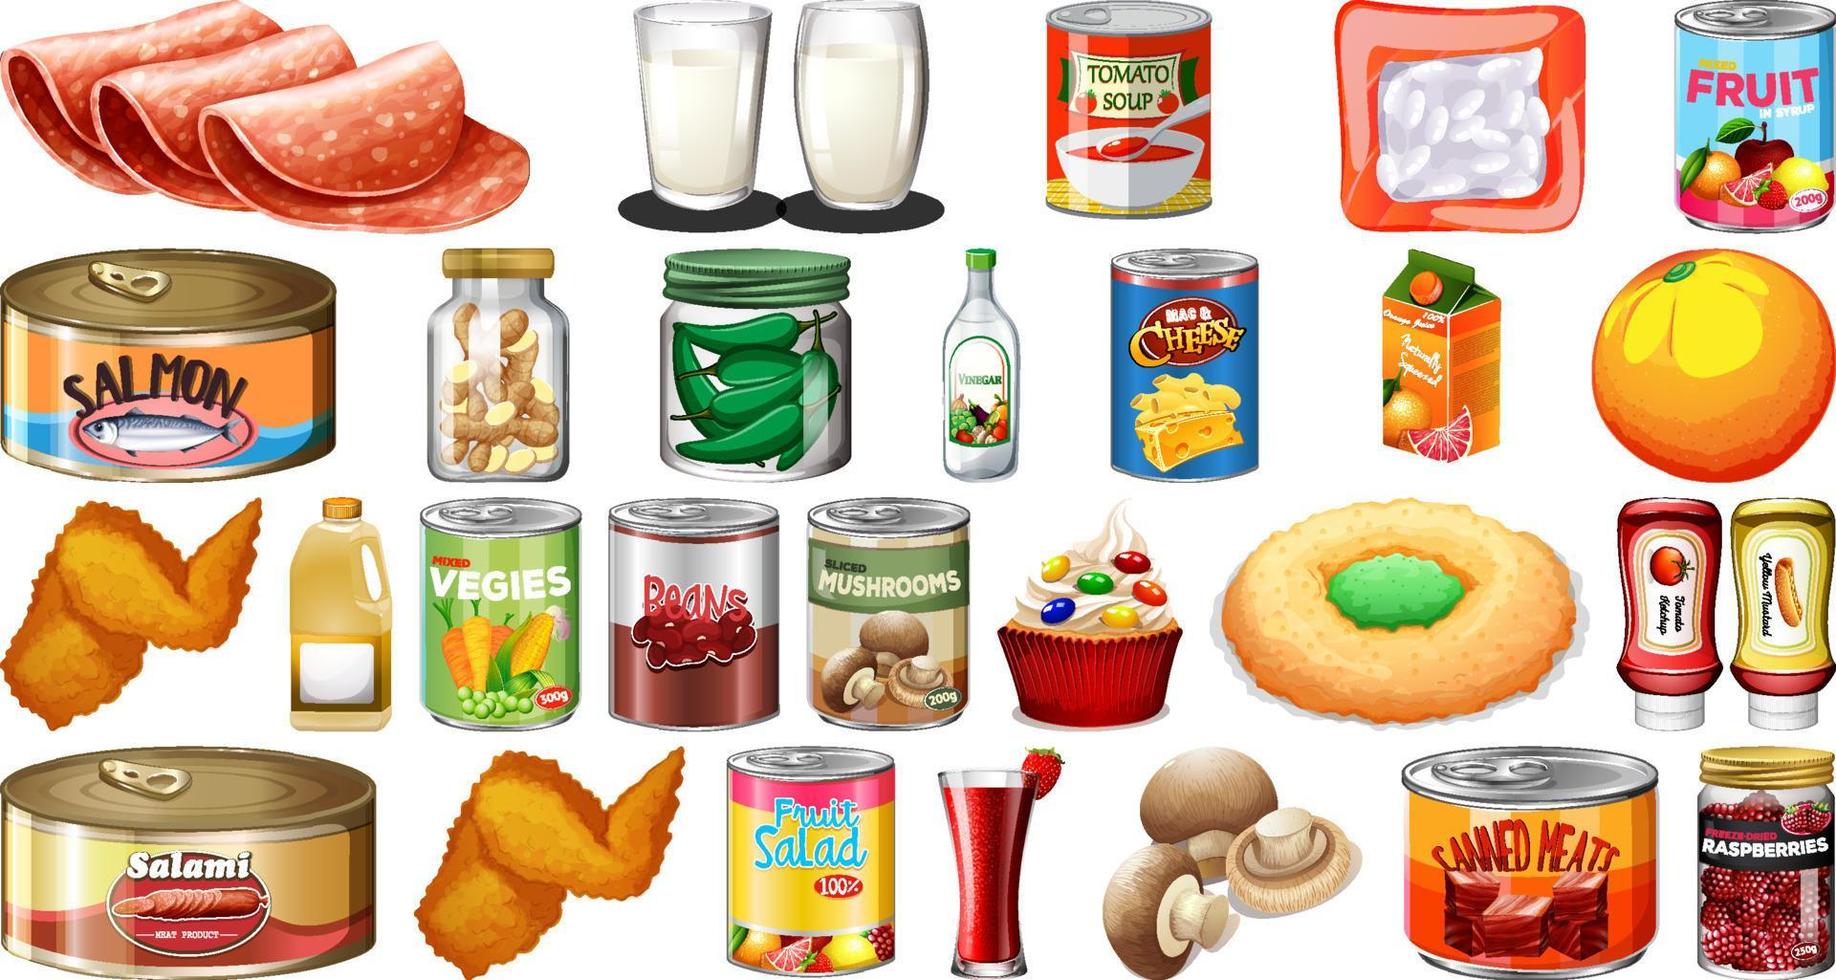 Set of different foods vector